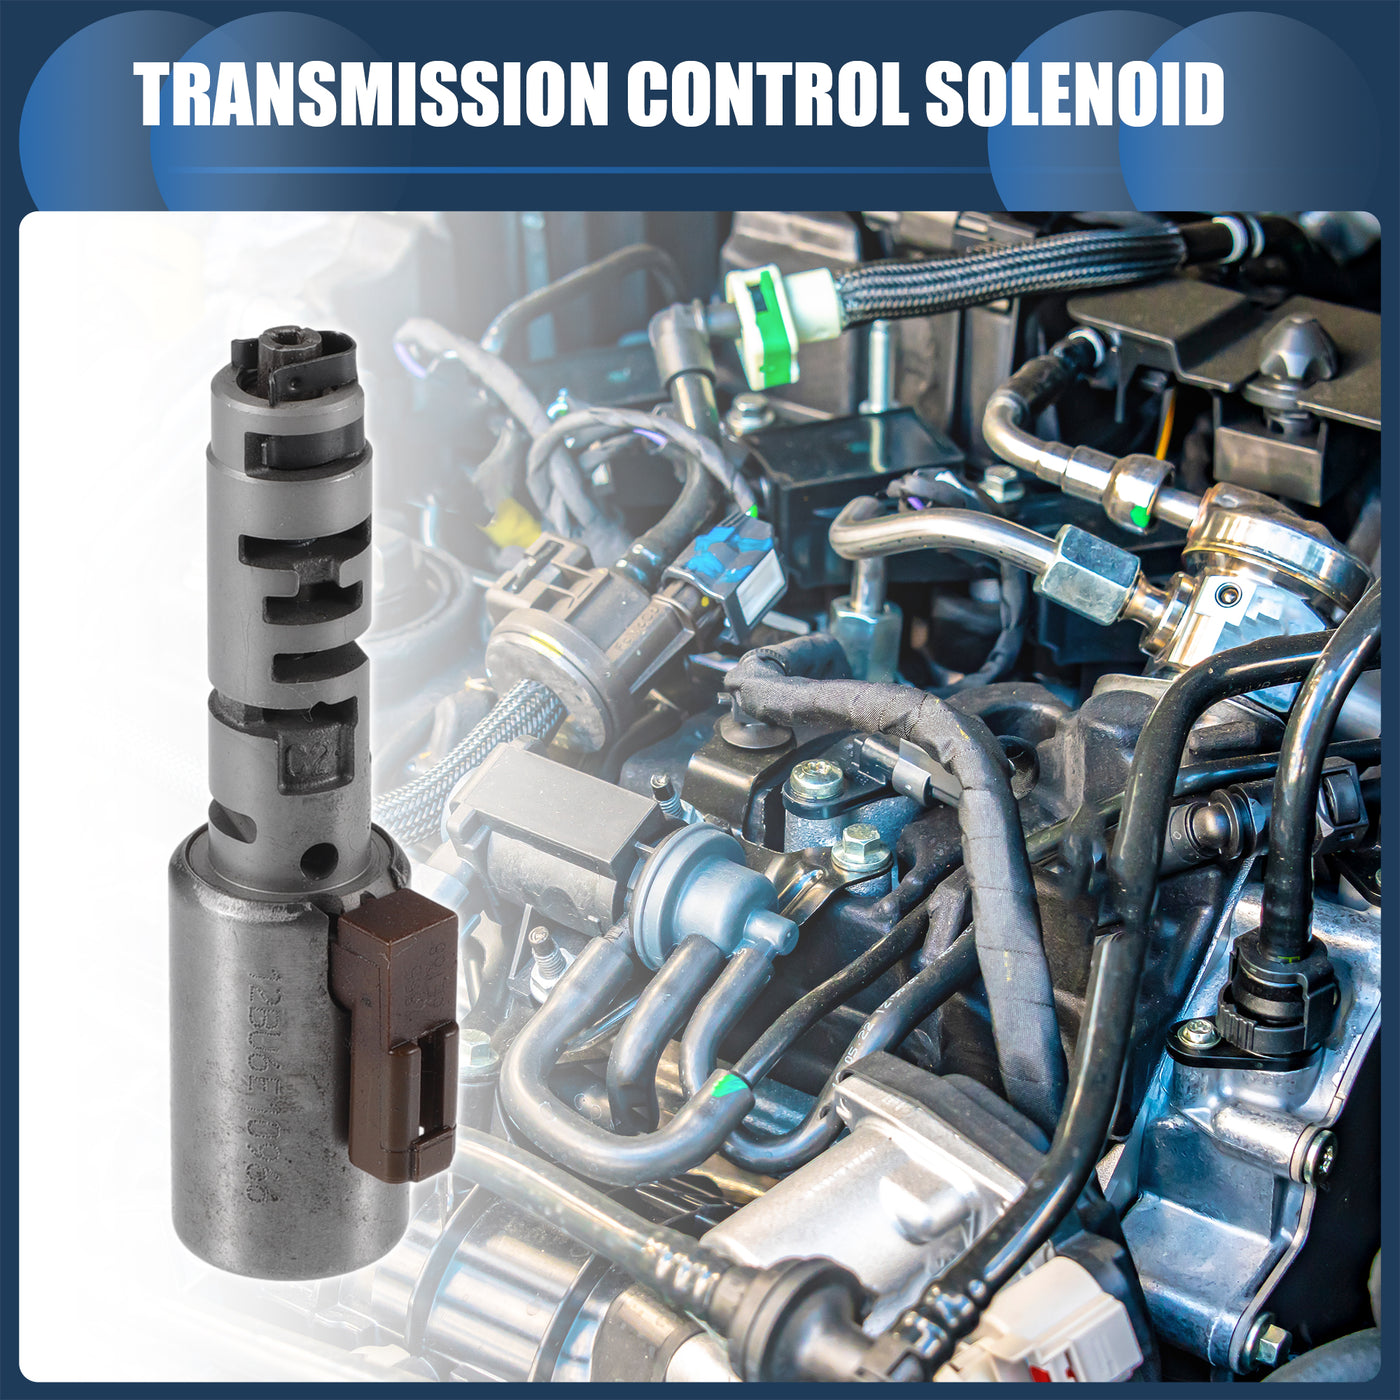 INFINAUTO Transmission Control Solenoid, No.3529034010 for Toyota Tundra 2005-2020 Silver Tone, 1 Pc